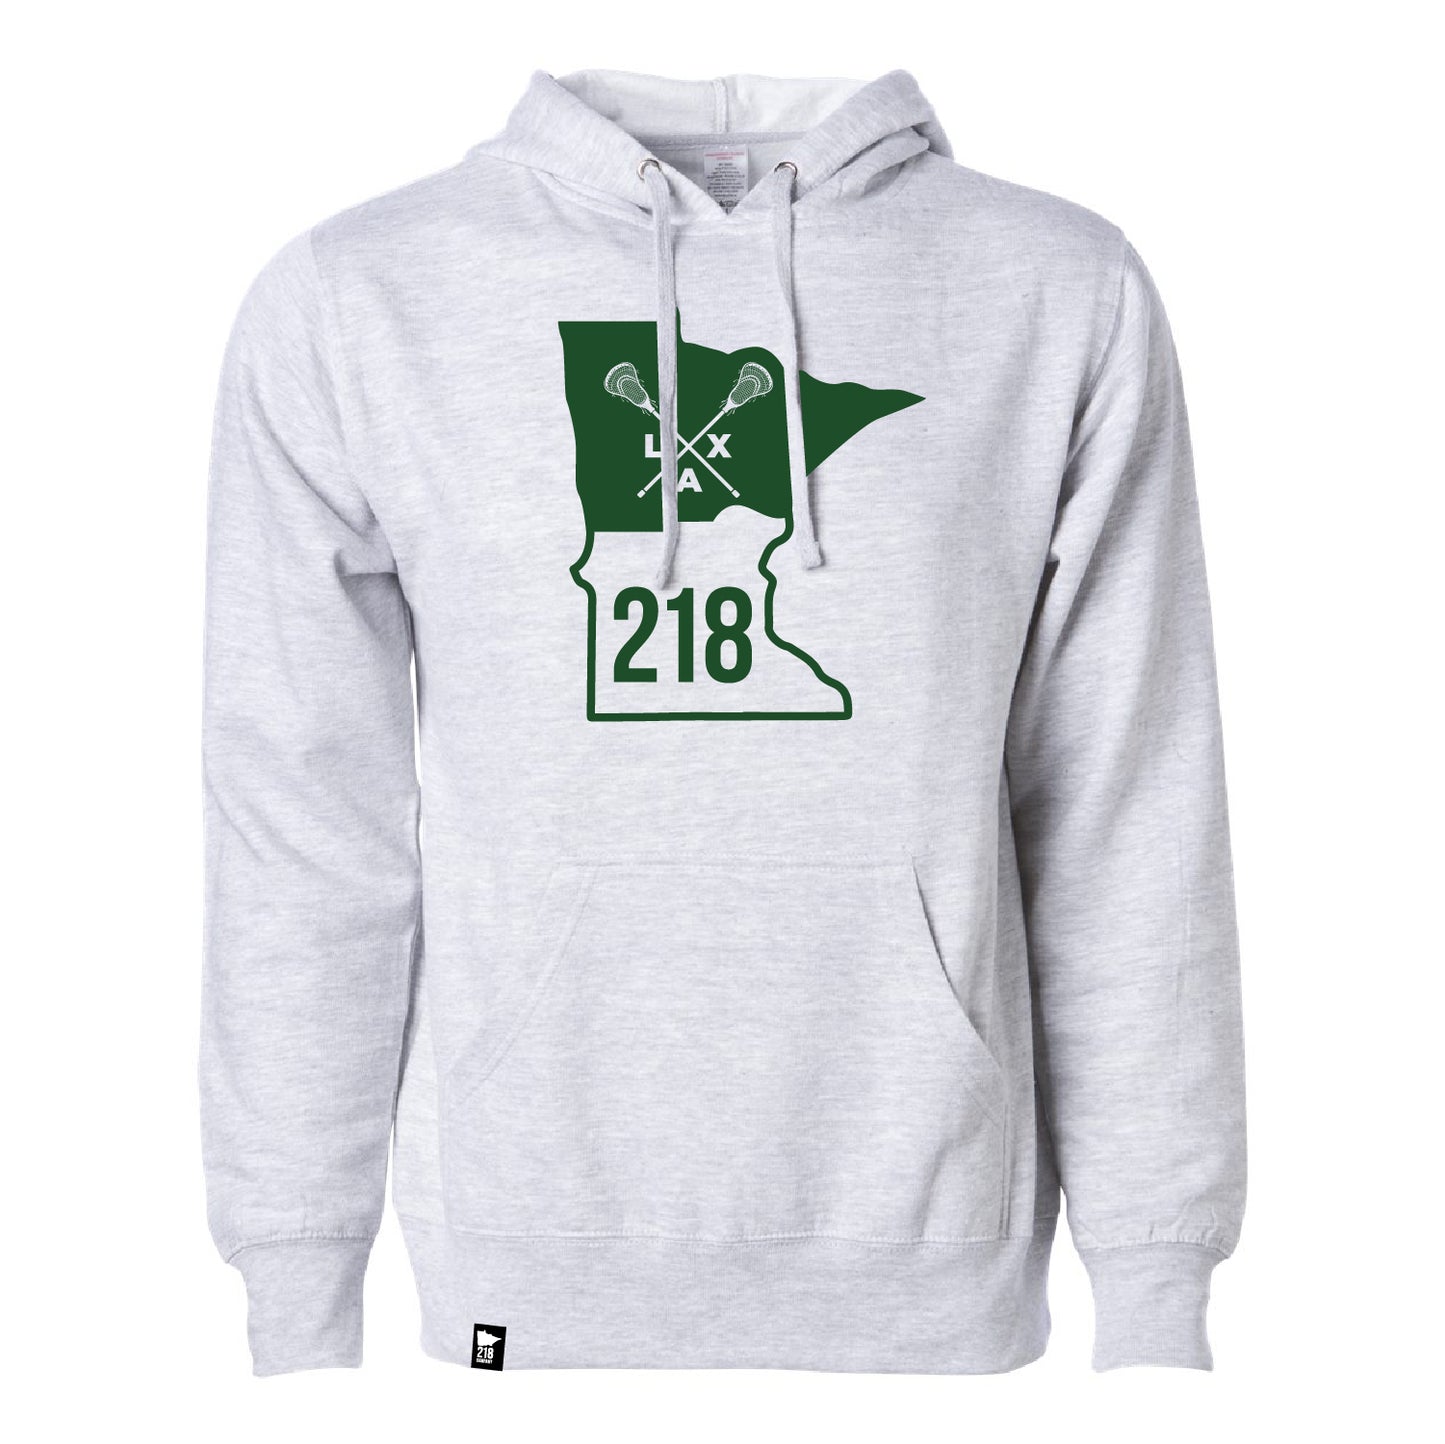 218 Lax Unisex Midweight Hooded Sweatshirt